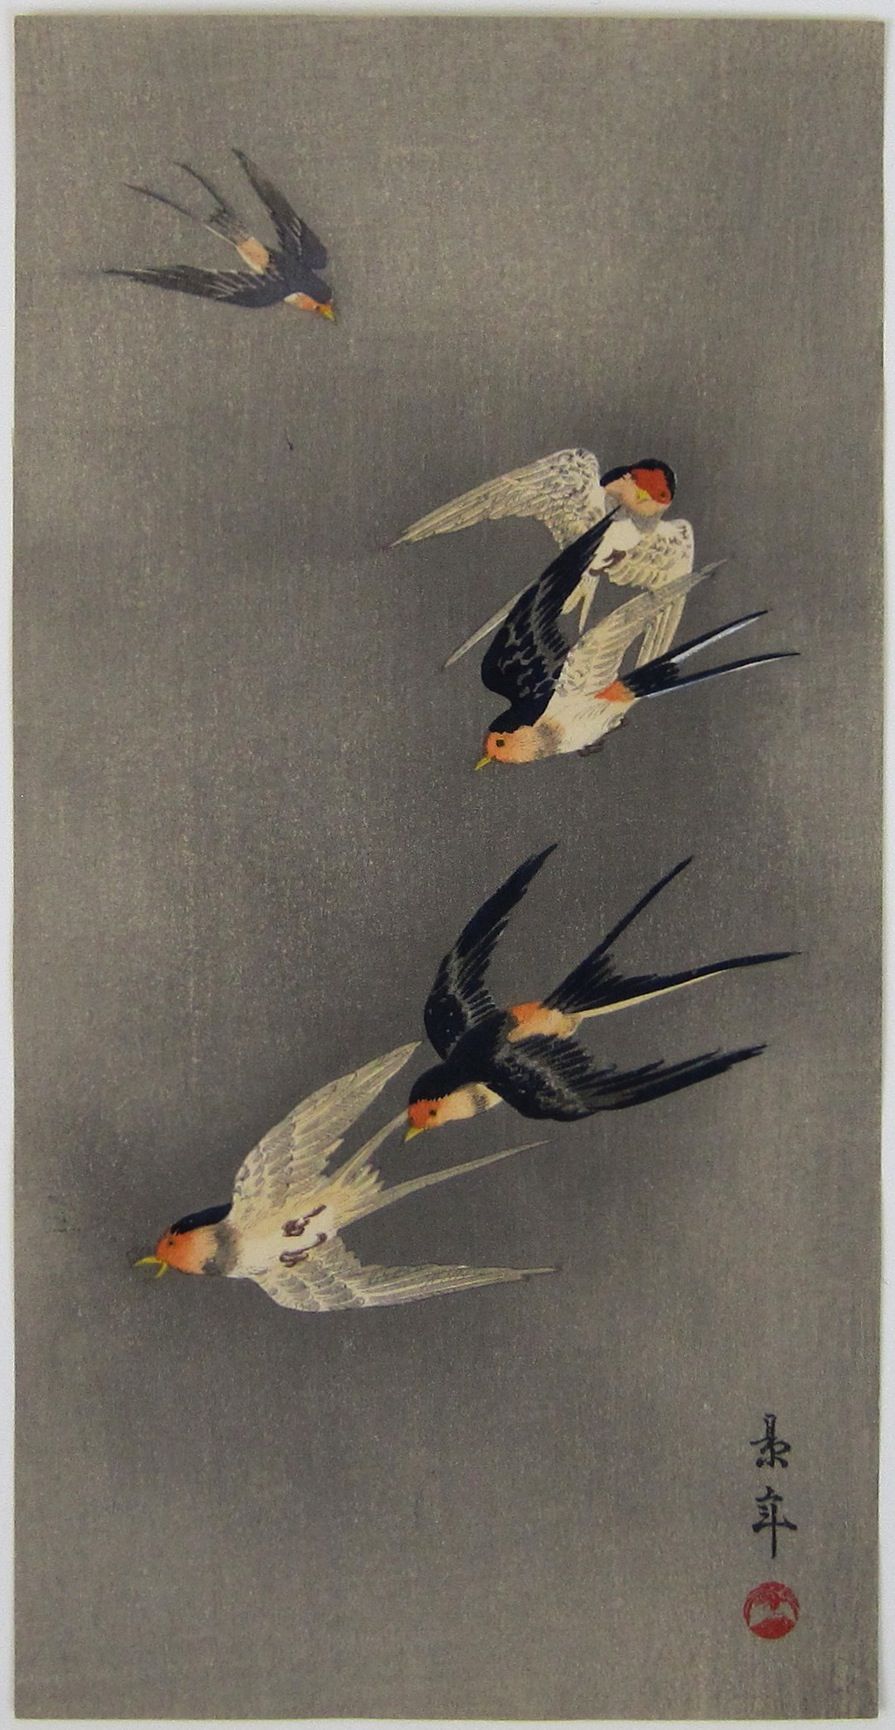 Barn swallows in flight. c.1930